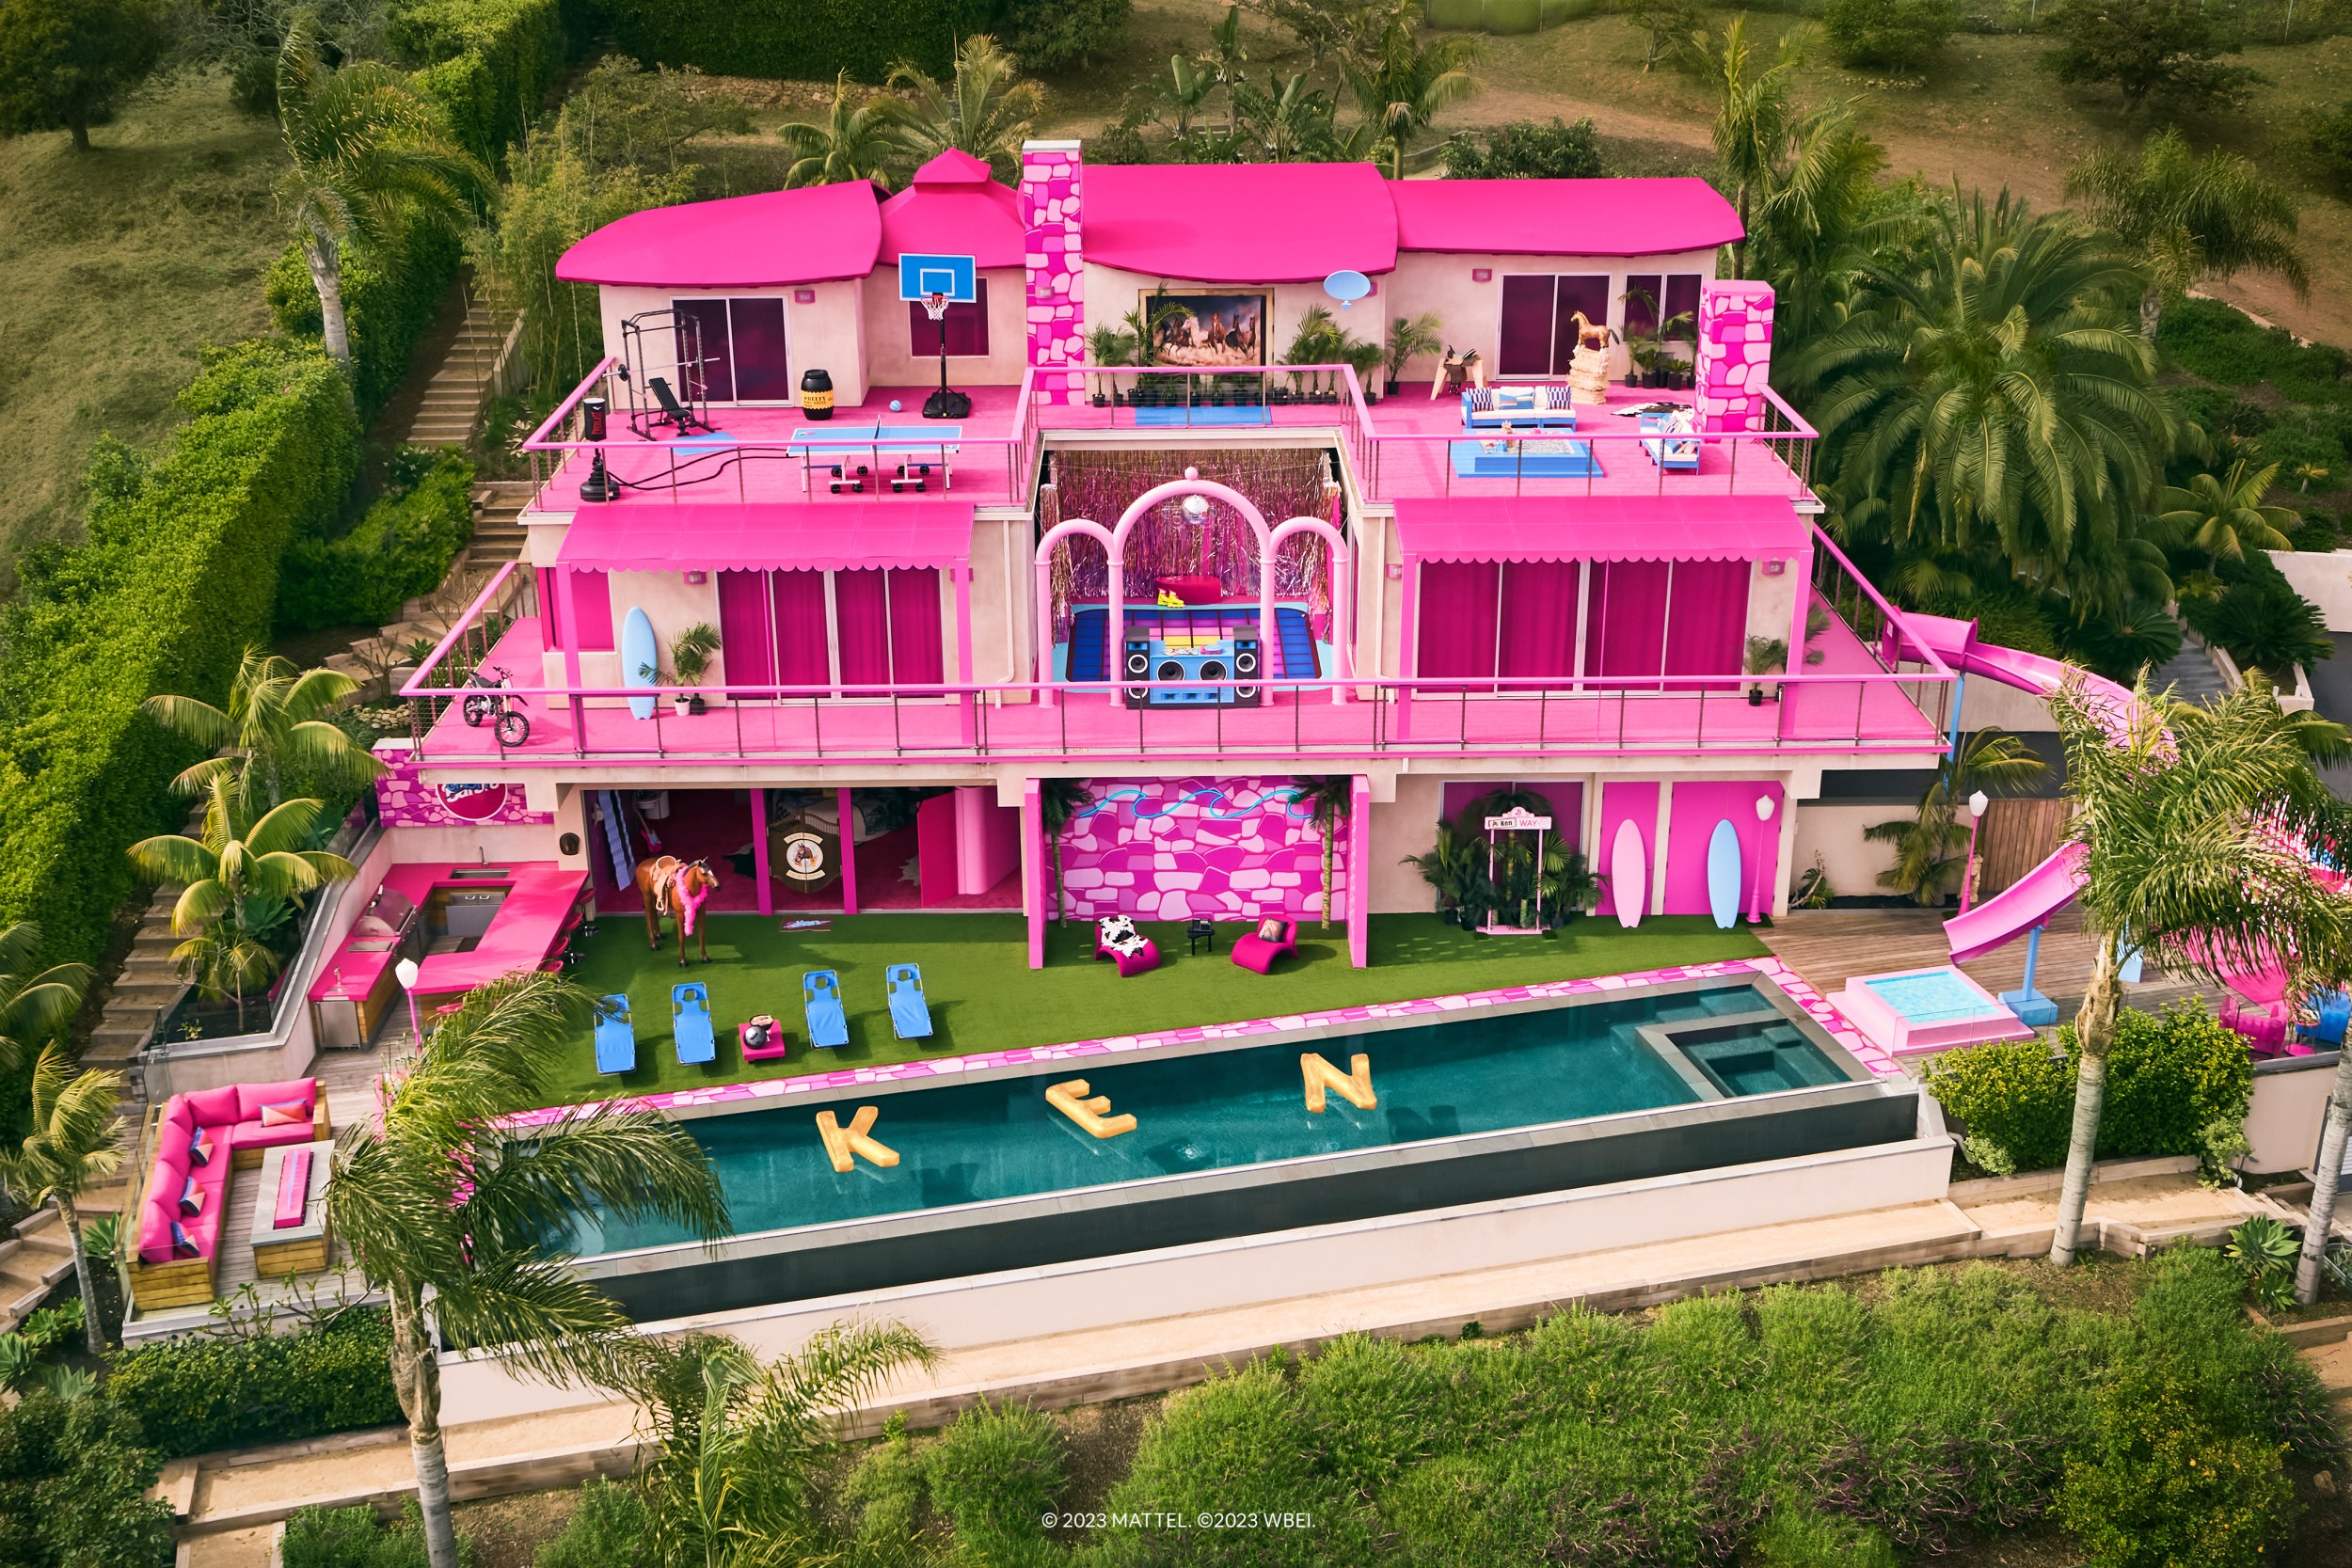 Claves de la campaña de marketing de la película Barbie - 01 Kens DreamHouse Airbnb Exterior Credit Hogwash Studios